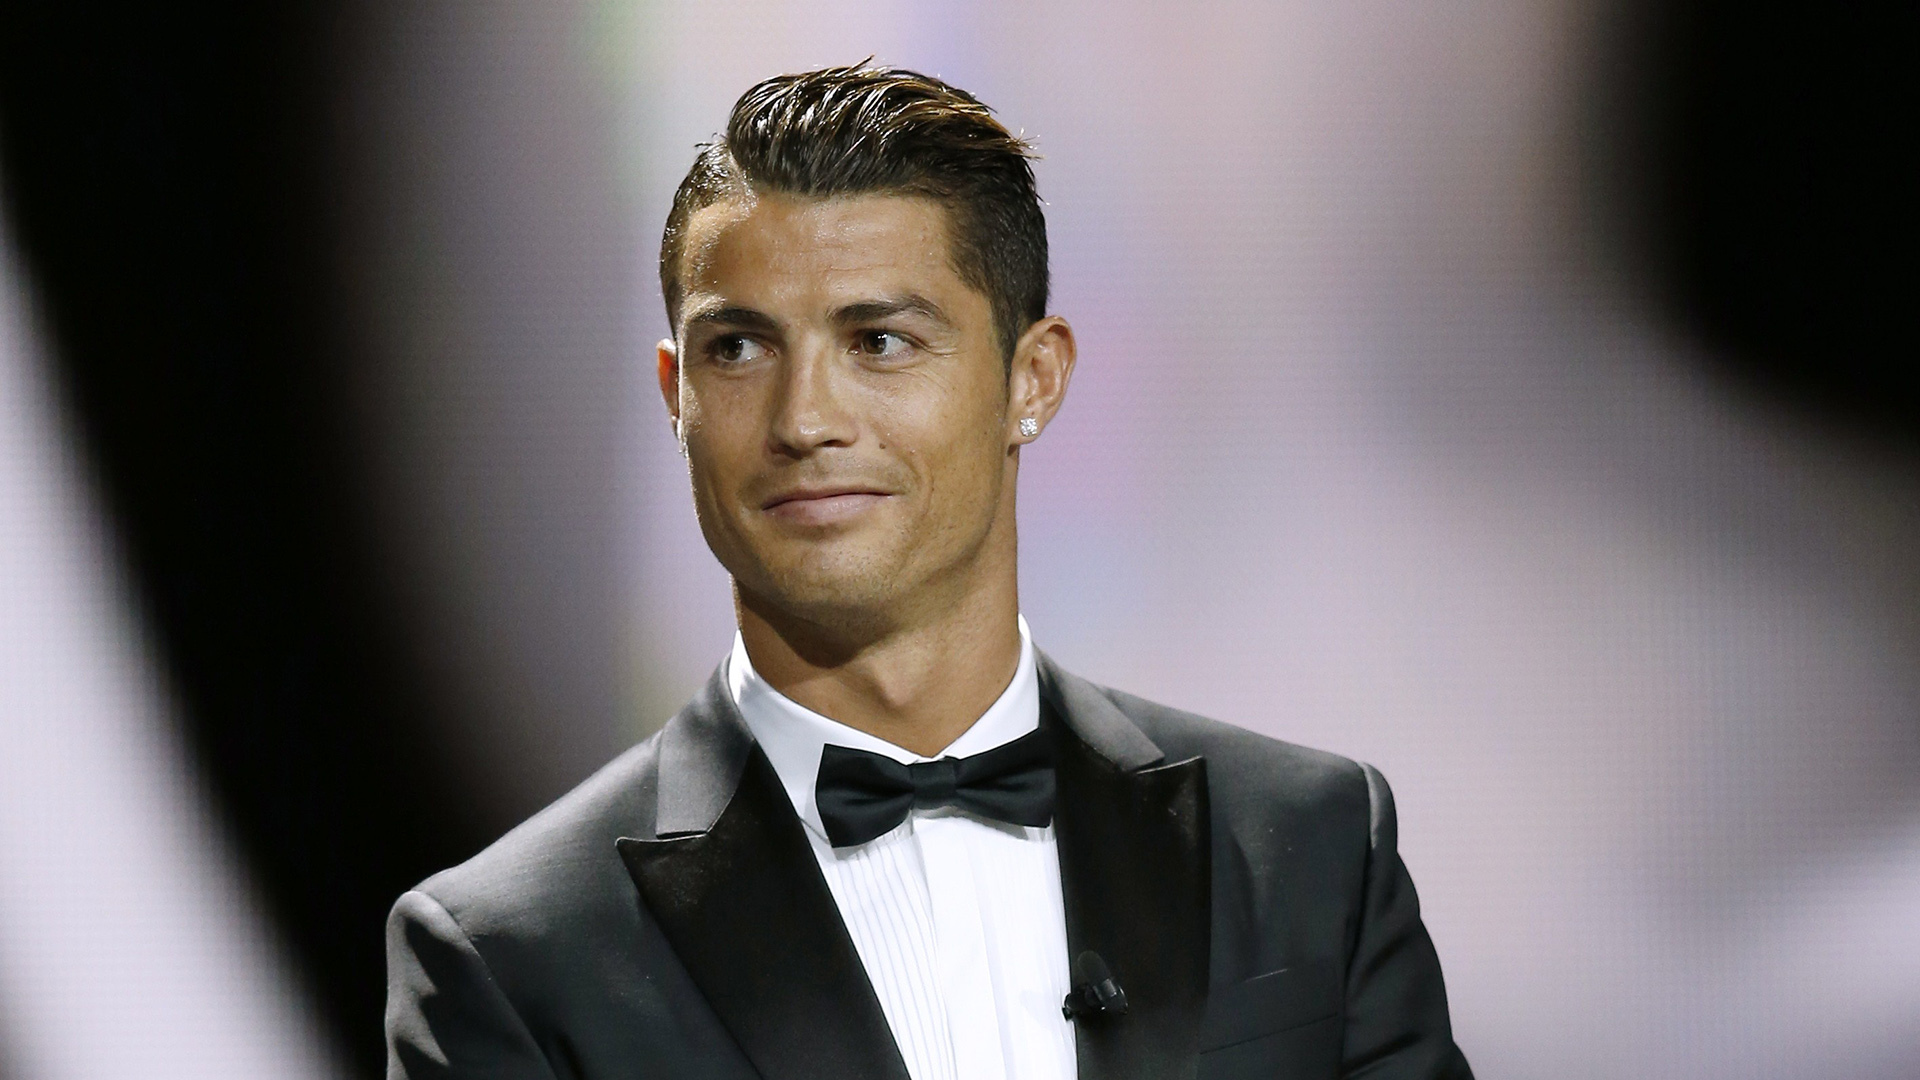 Cristiano Ronaldo Hd Free Football Function Mobile Desktop Download Wallpapers Pics